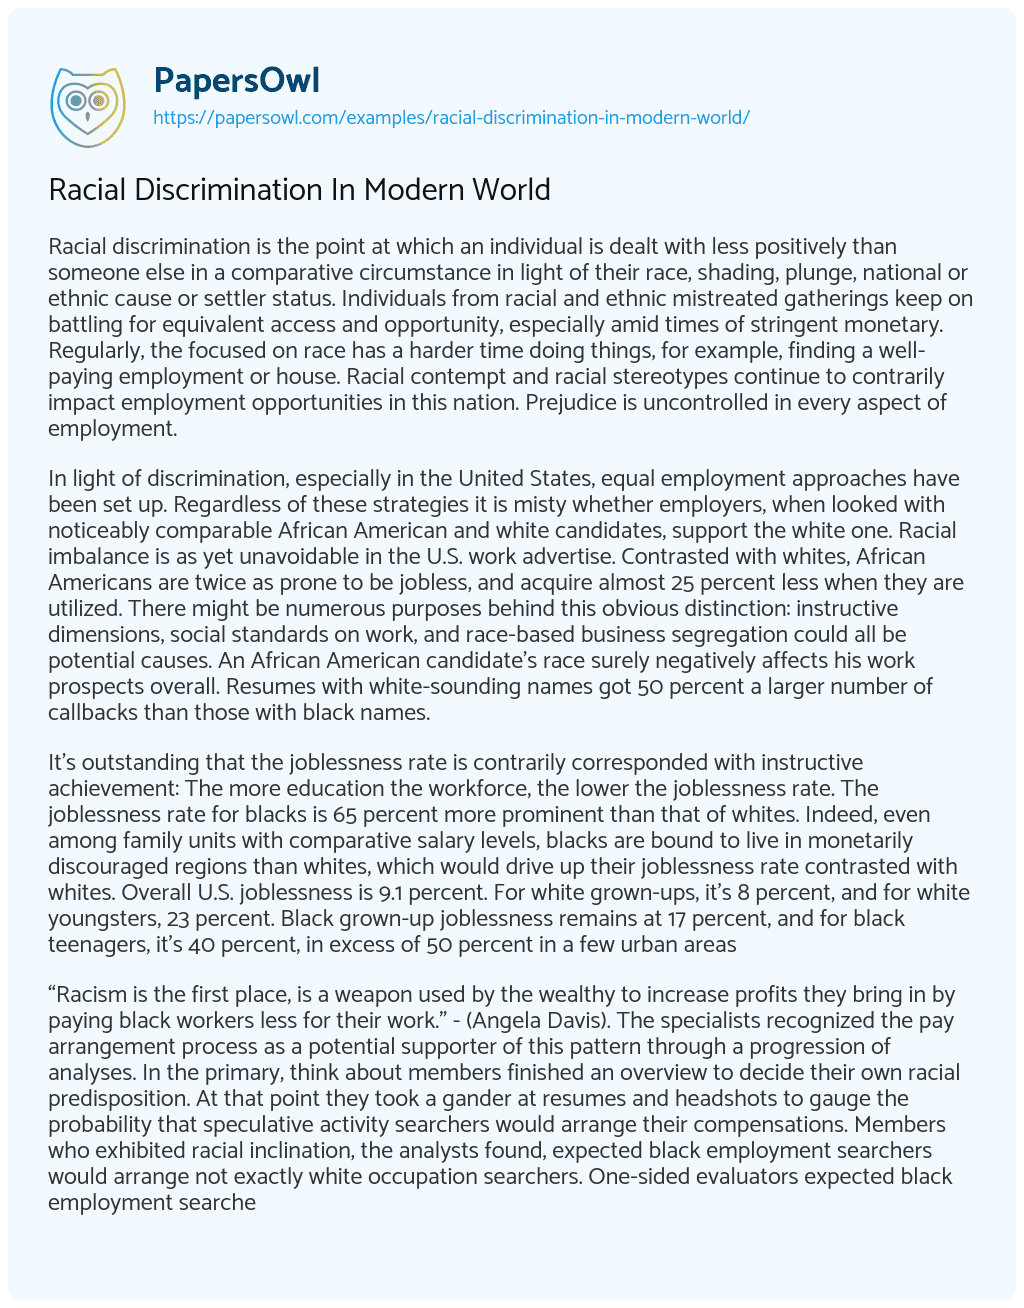 Racial Discrimination in Modern World essay